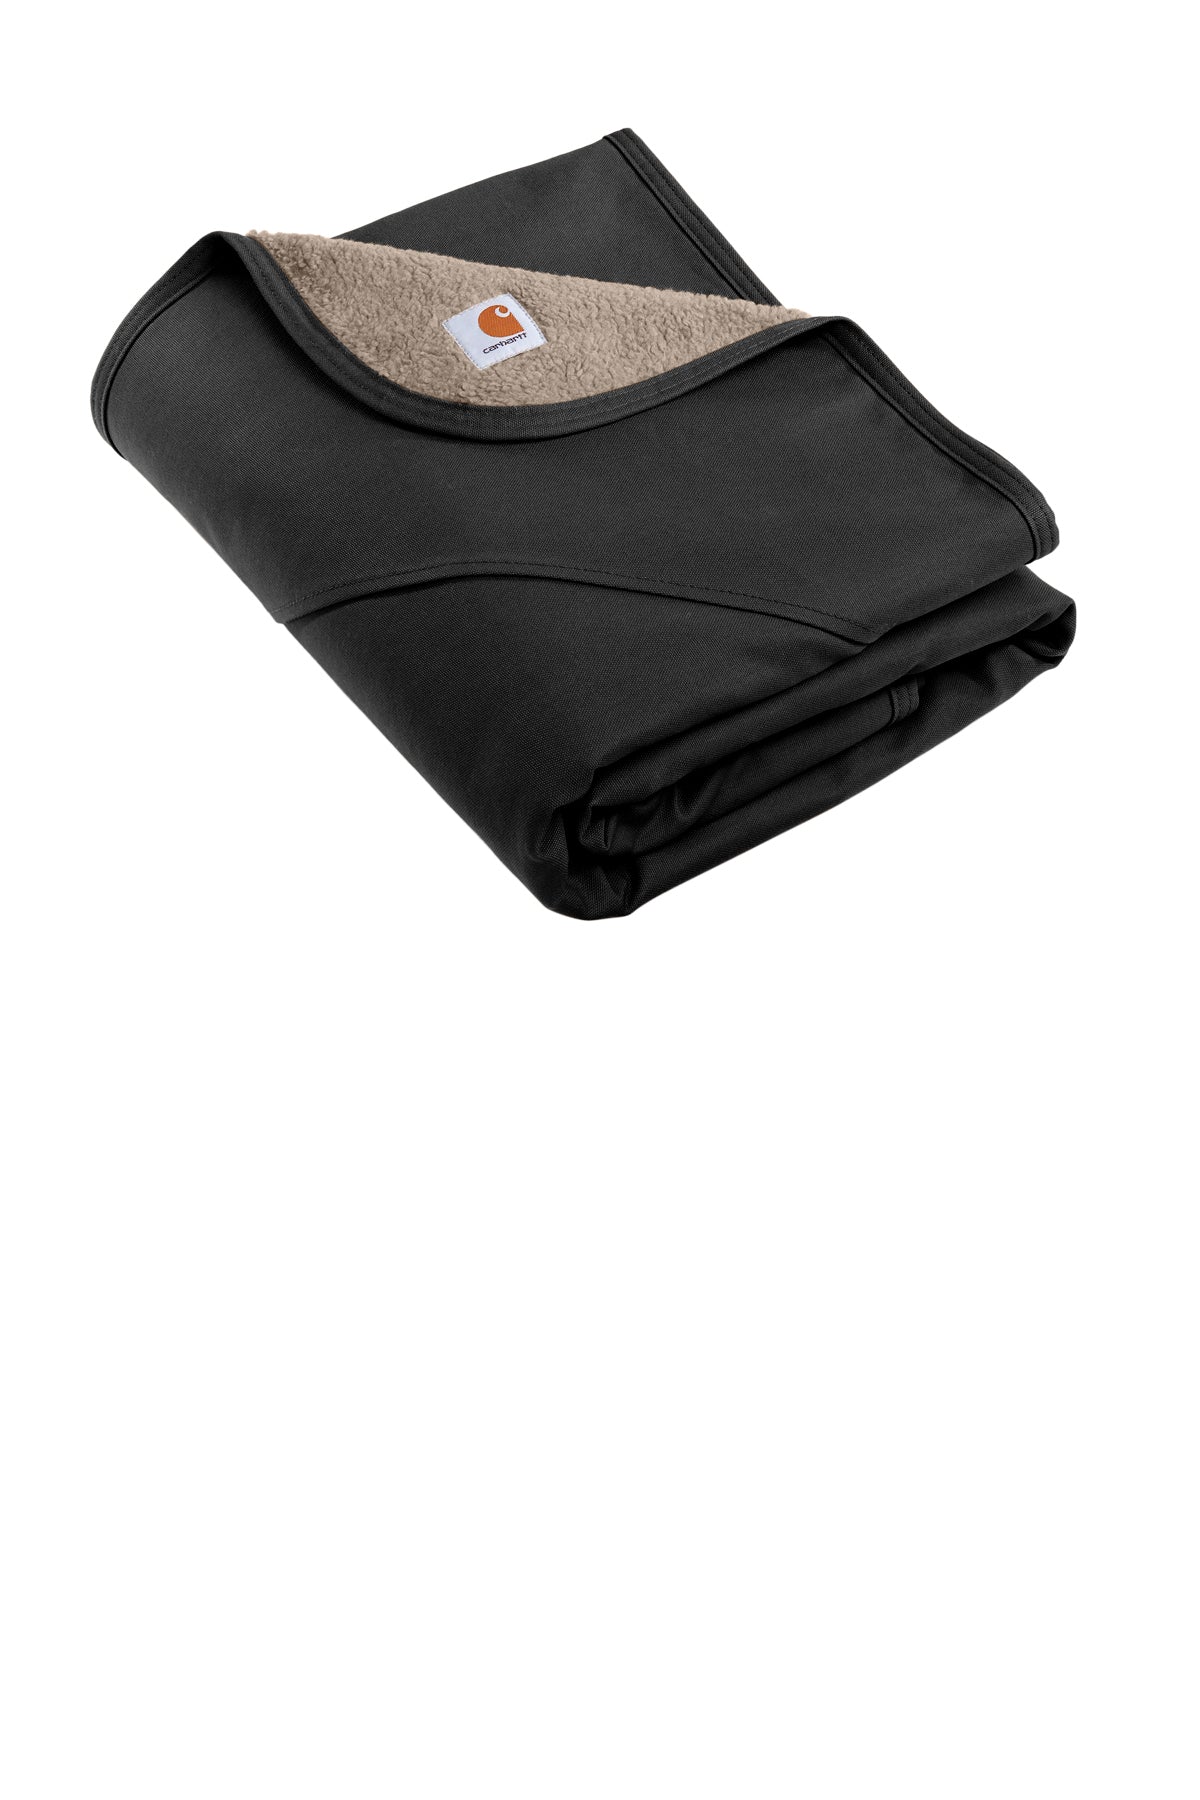 Carhartt Firm Duck Sherpa-Lined Custom Blankets, Black